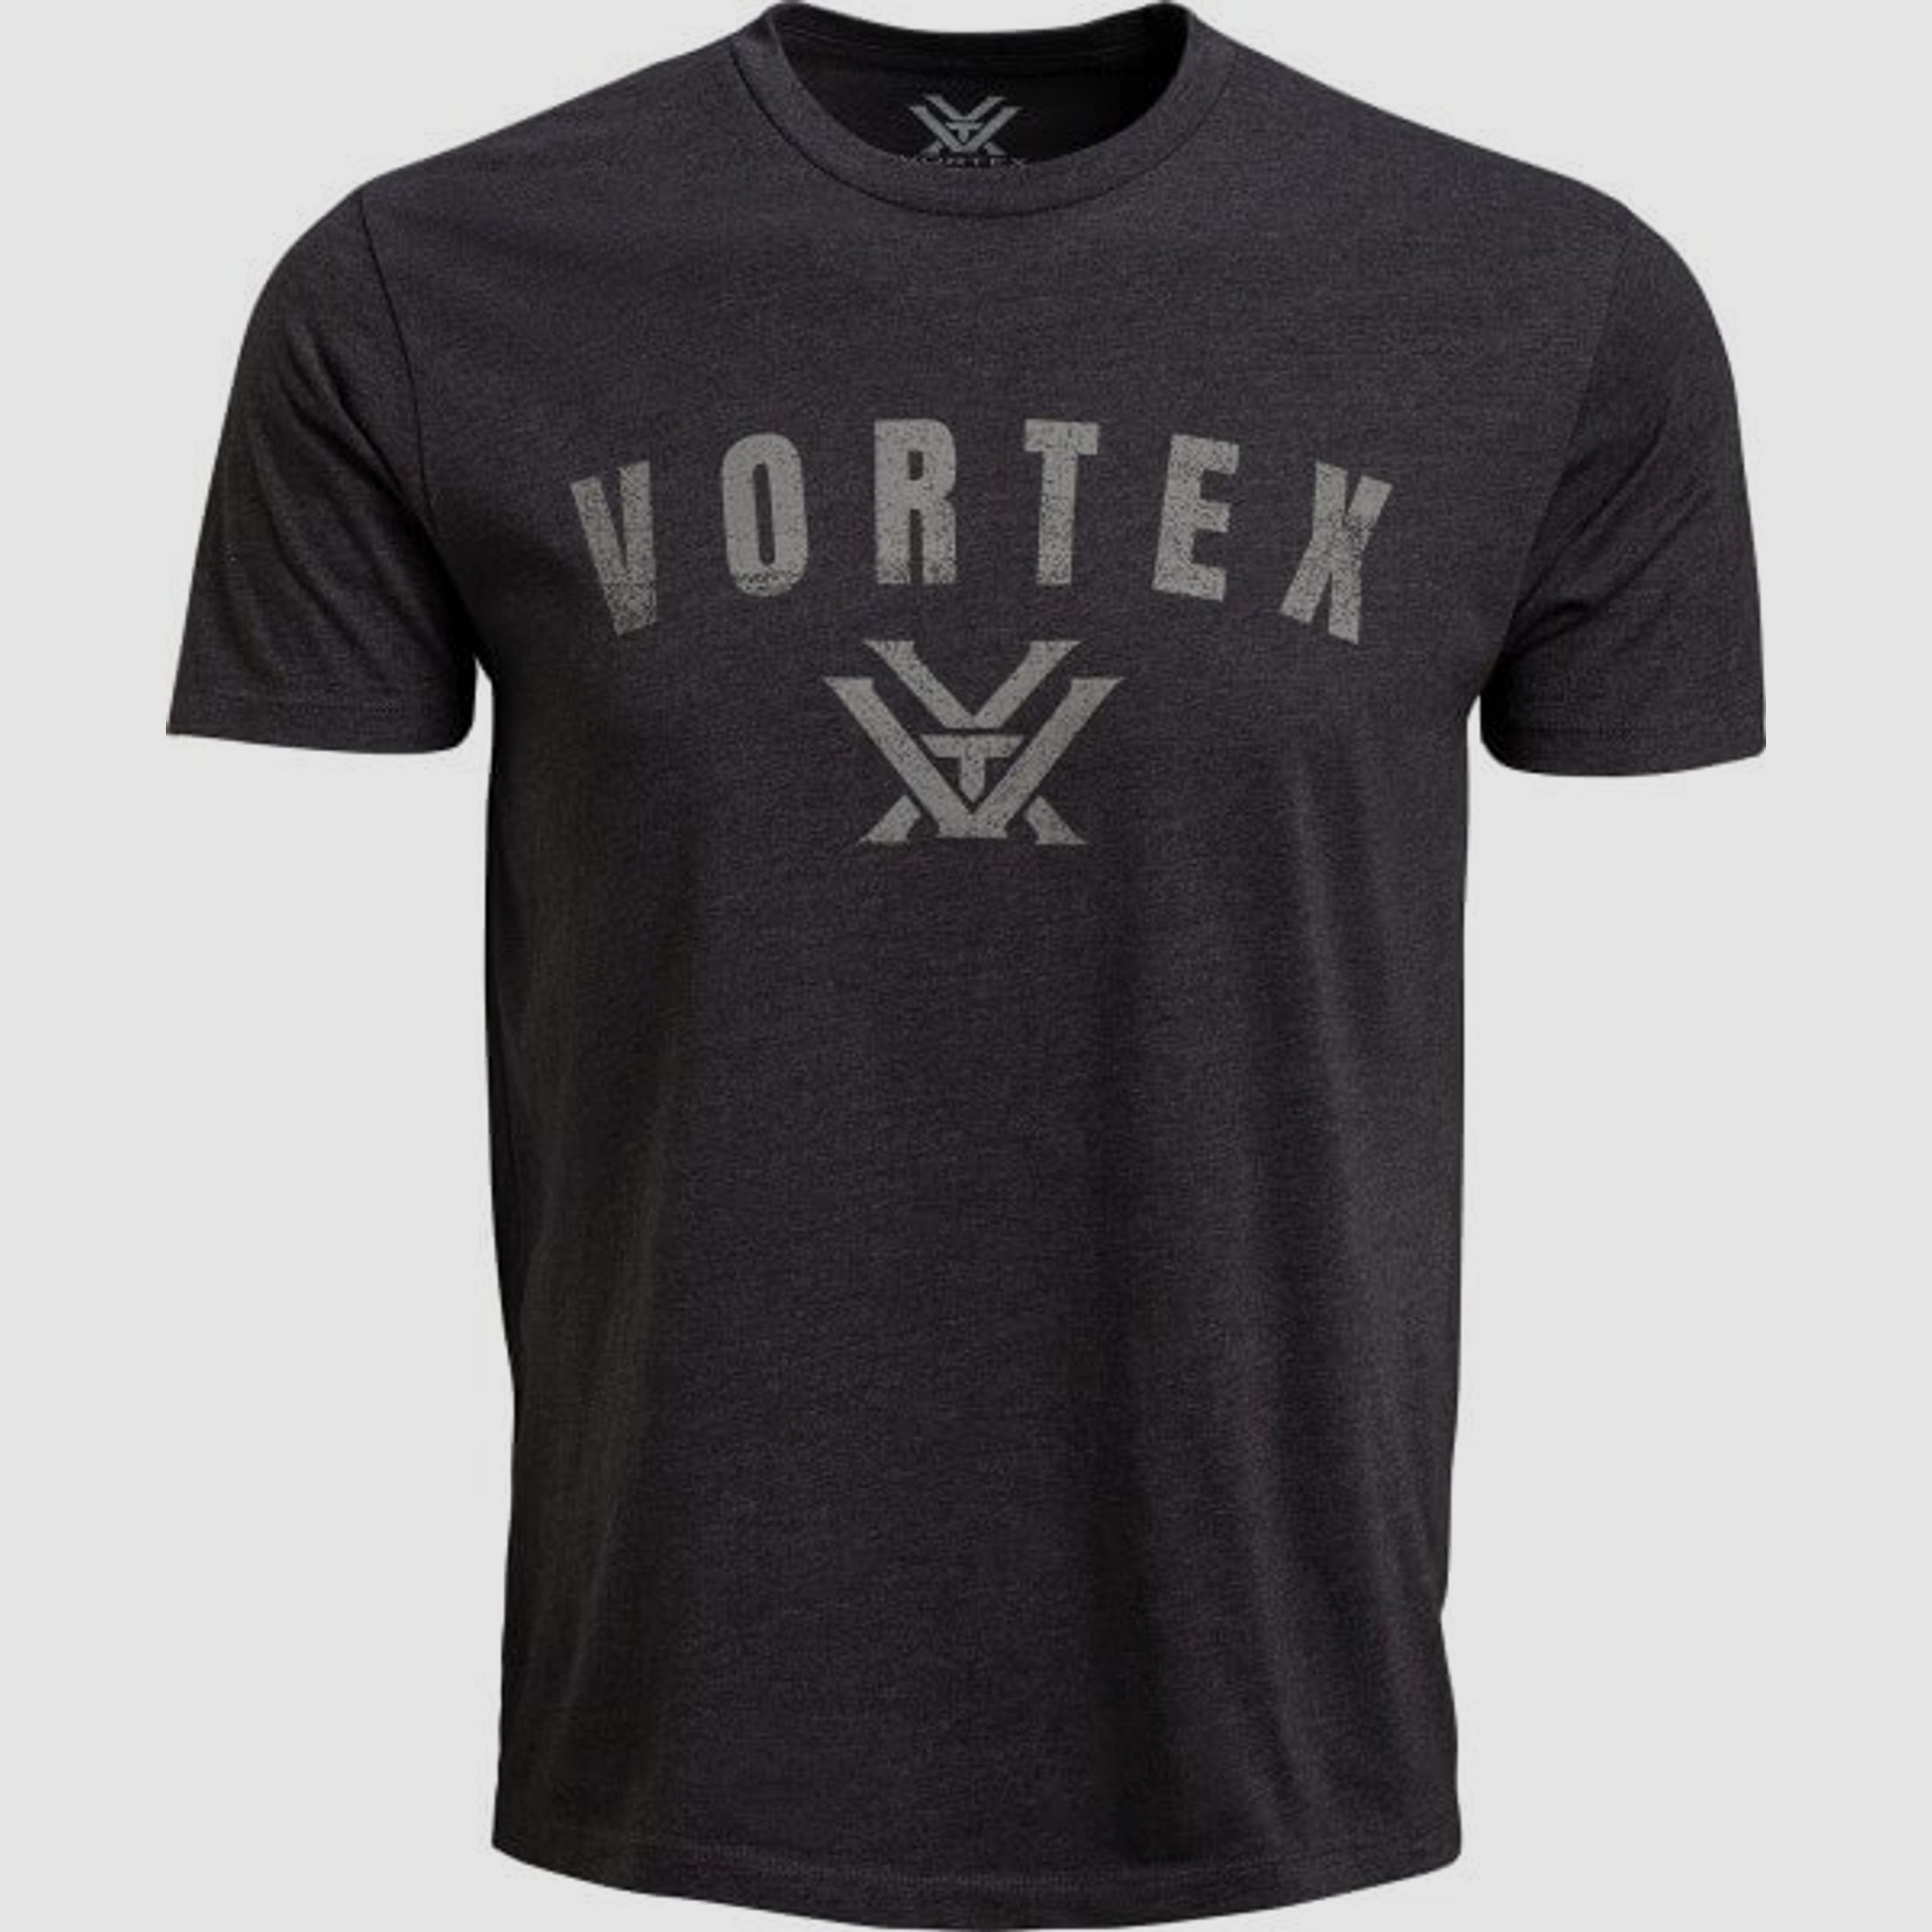 Vortex U SS T-Shirt XL